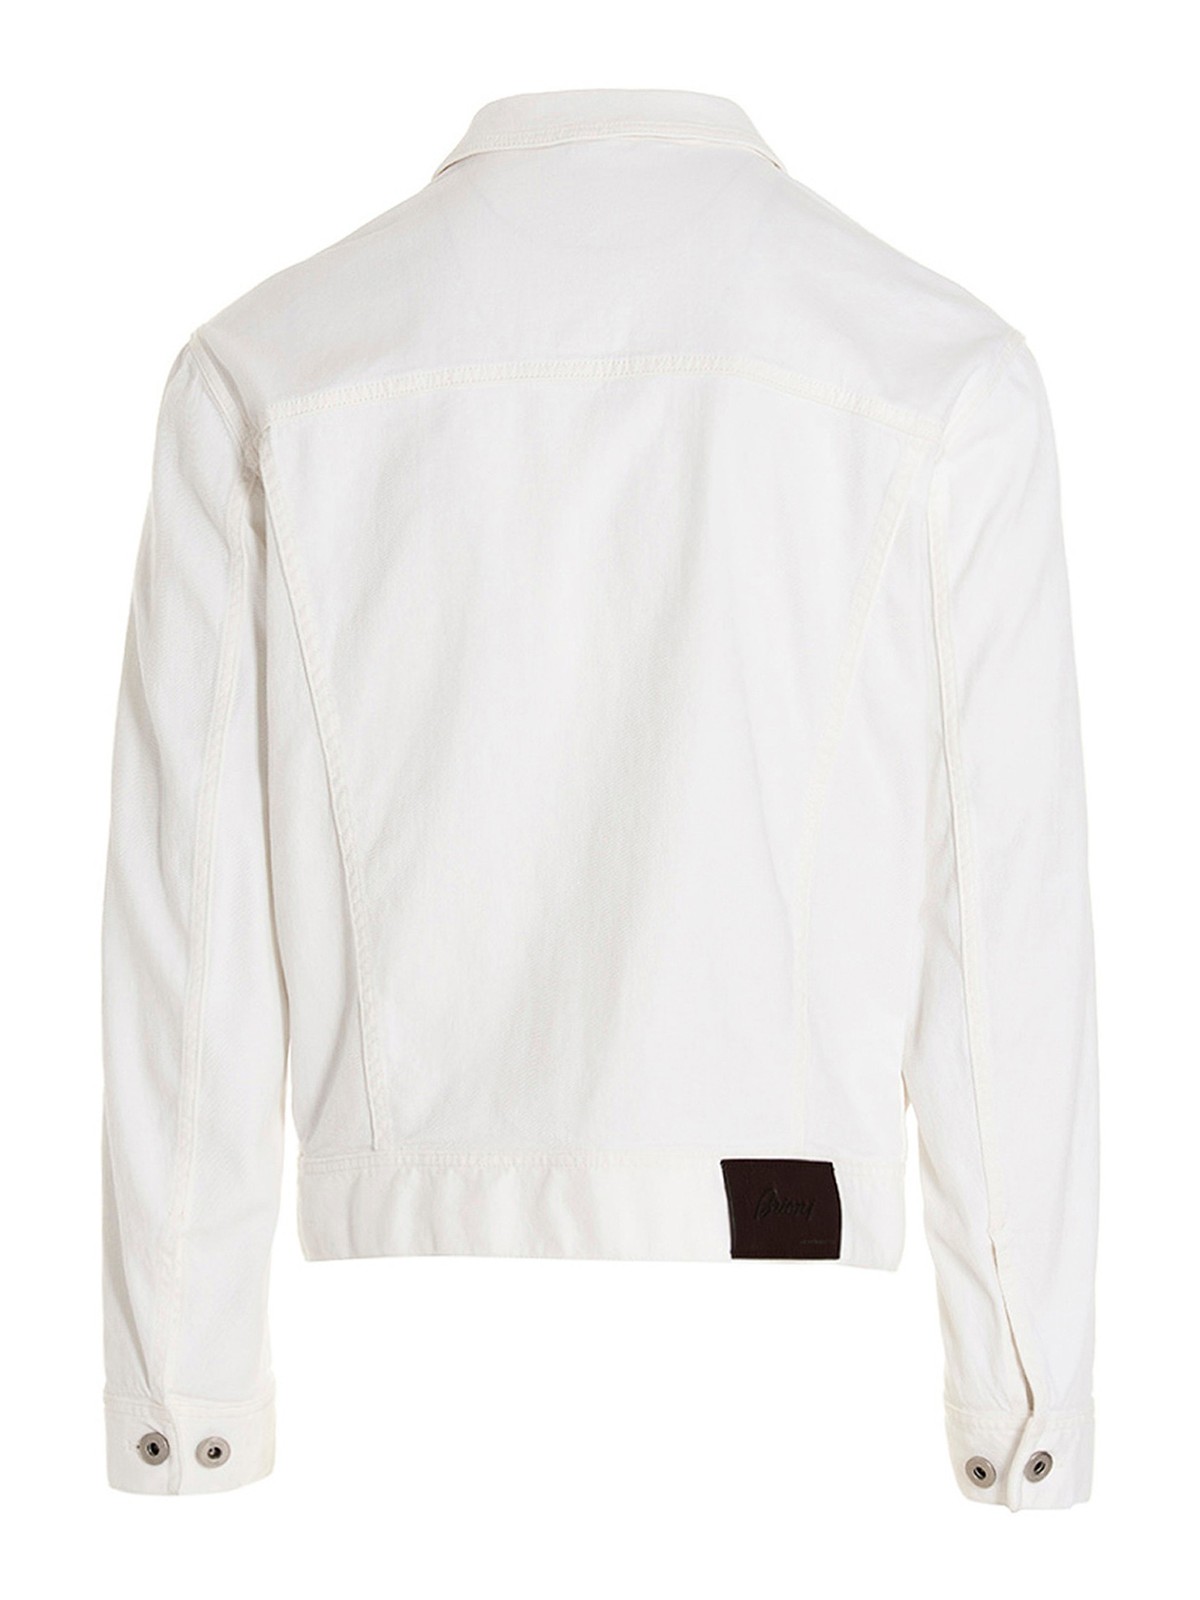 Oversized Light Washed Ripped Denim Jacket Womens | White denim jacket, Denim  jacket women, Fashion outfits